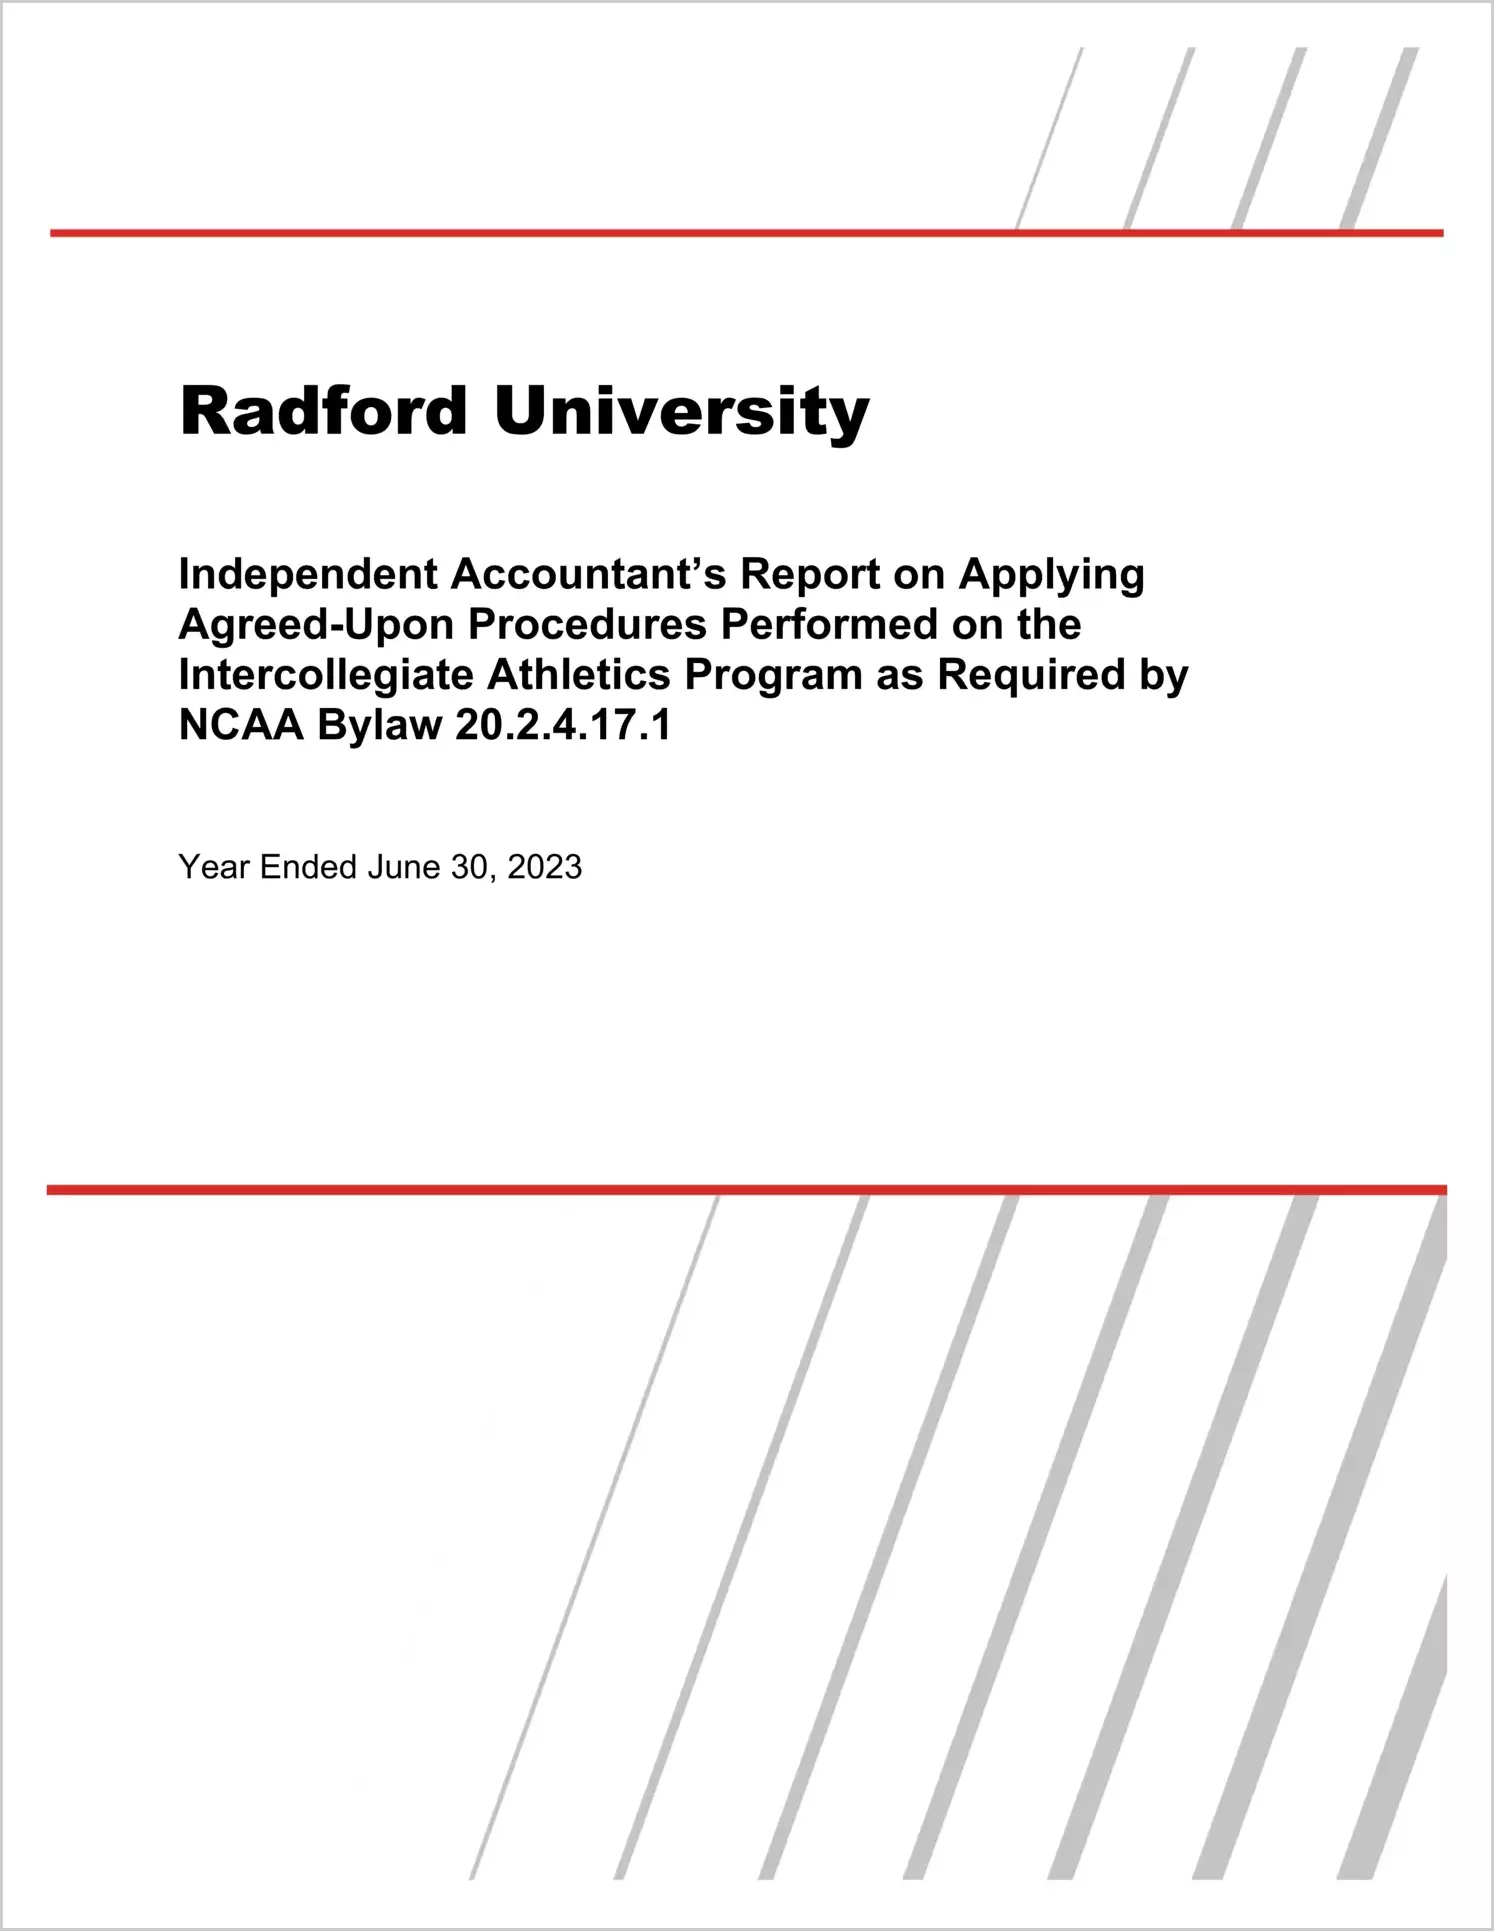 Radford University Intercollegiate Athletics Programs for the year ended June 30, 2023